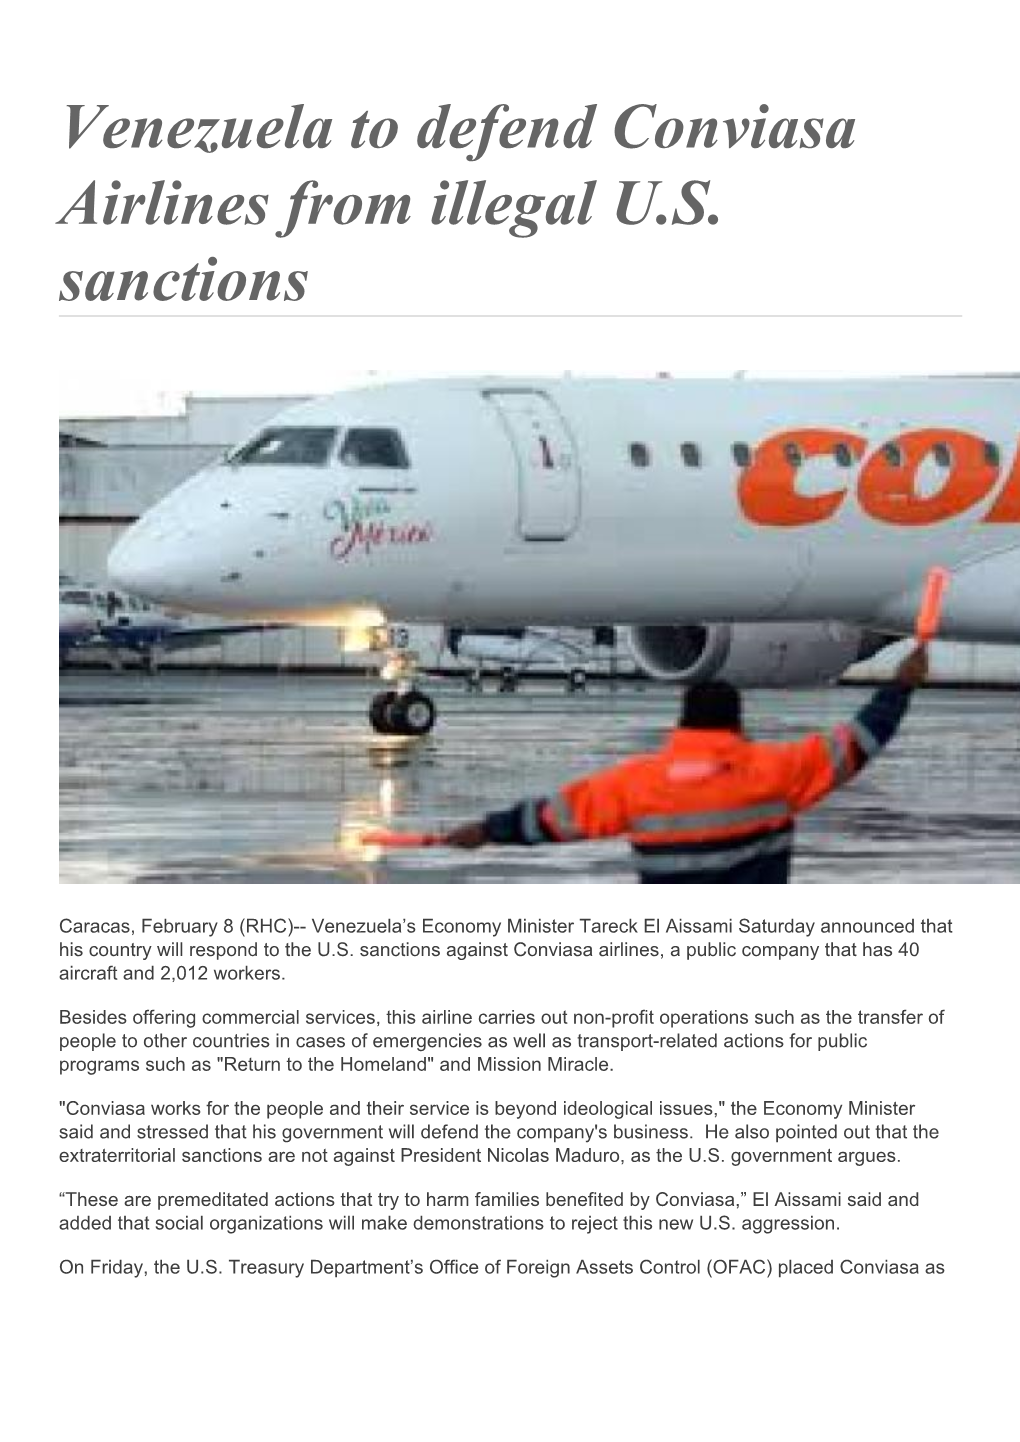 Venezuela to Defend Conviasa Airlines from Illegal U.S. Sanctions